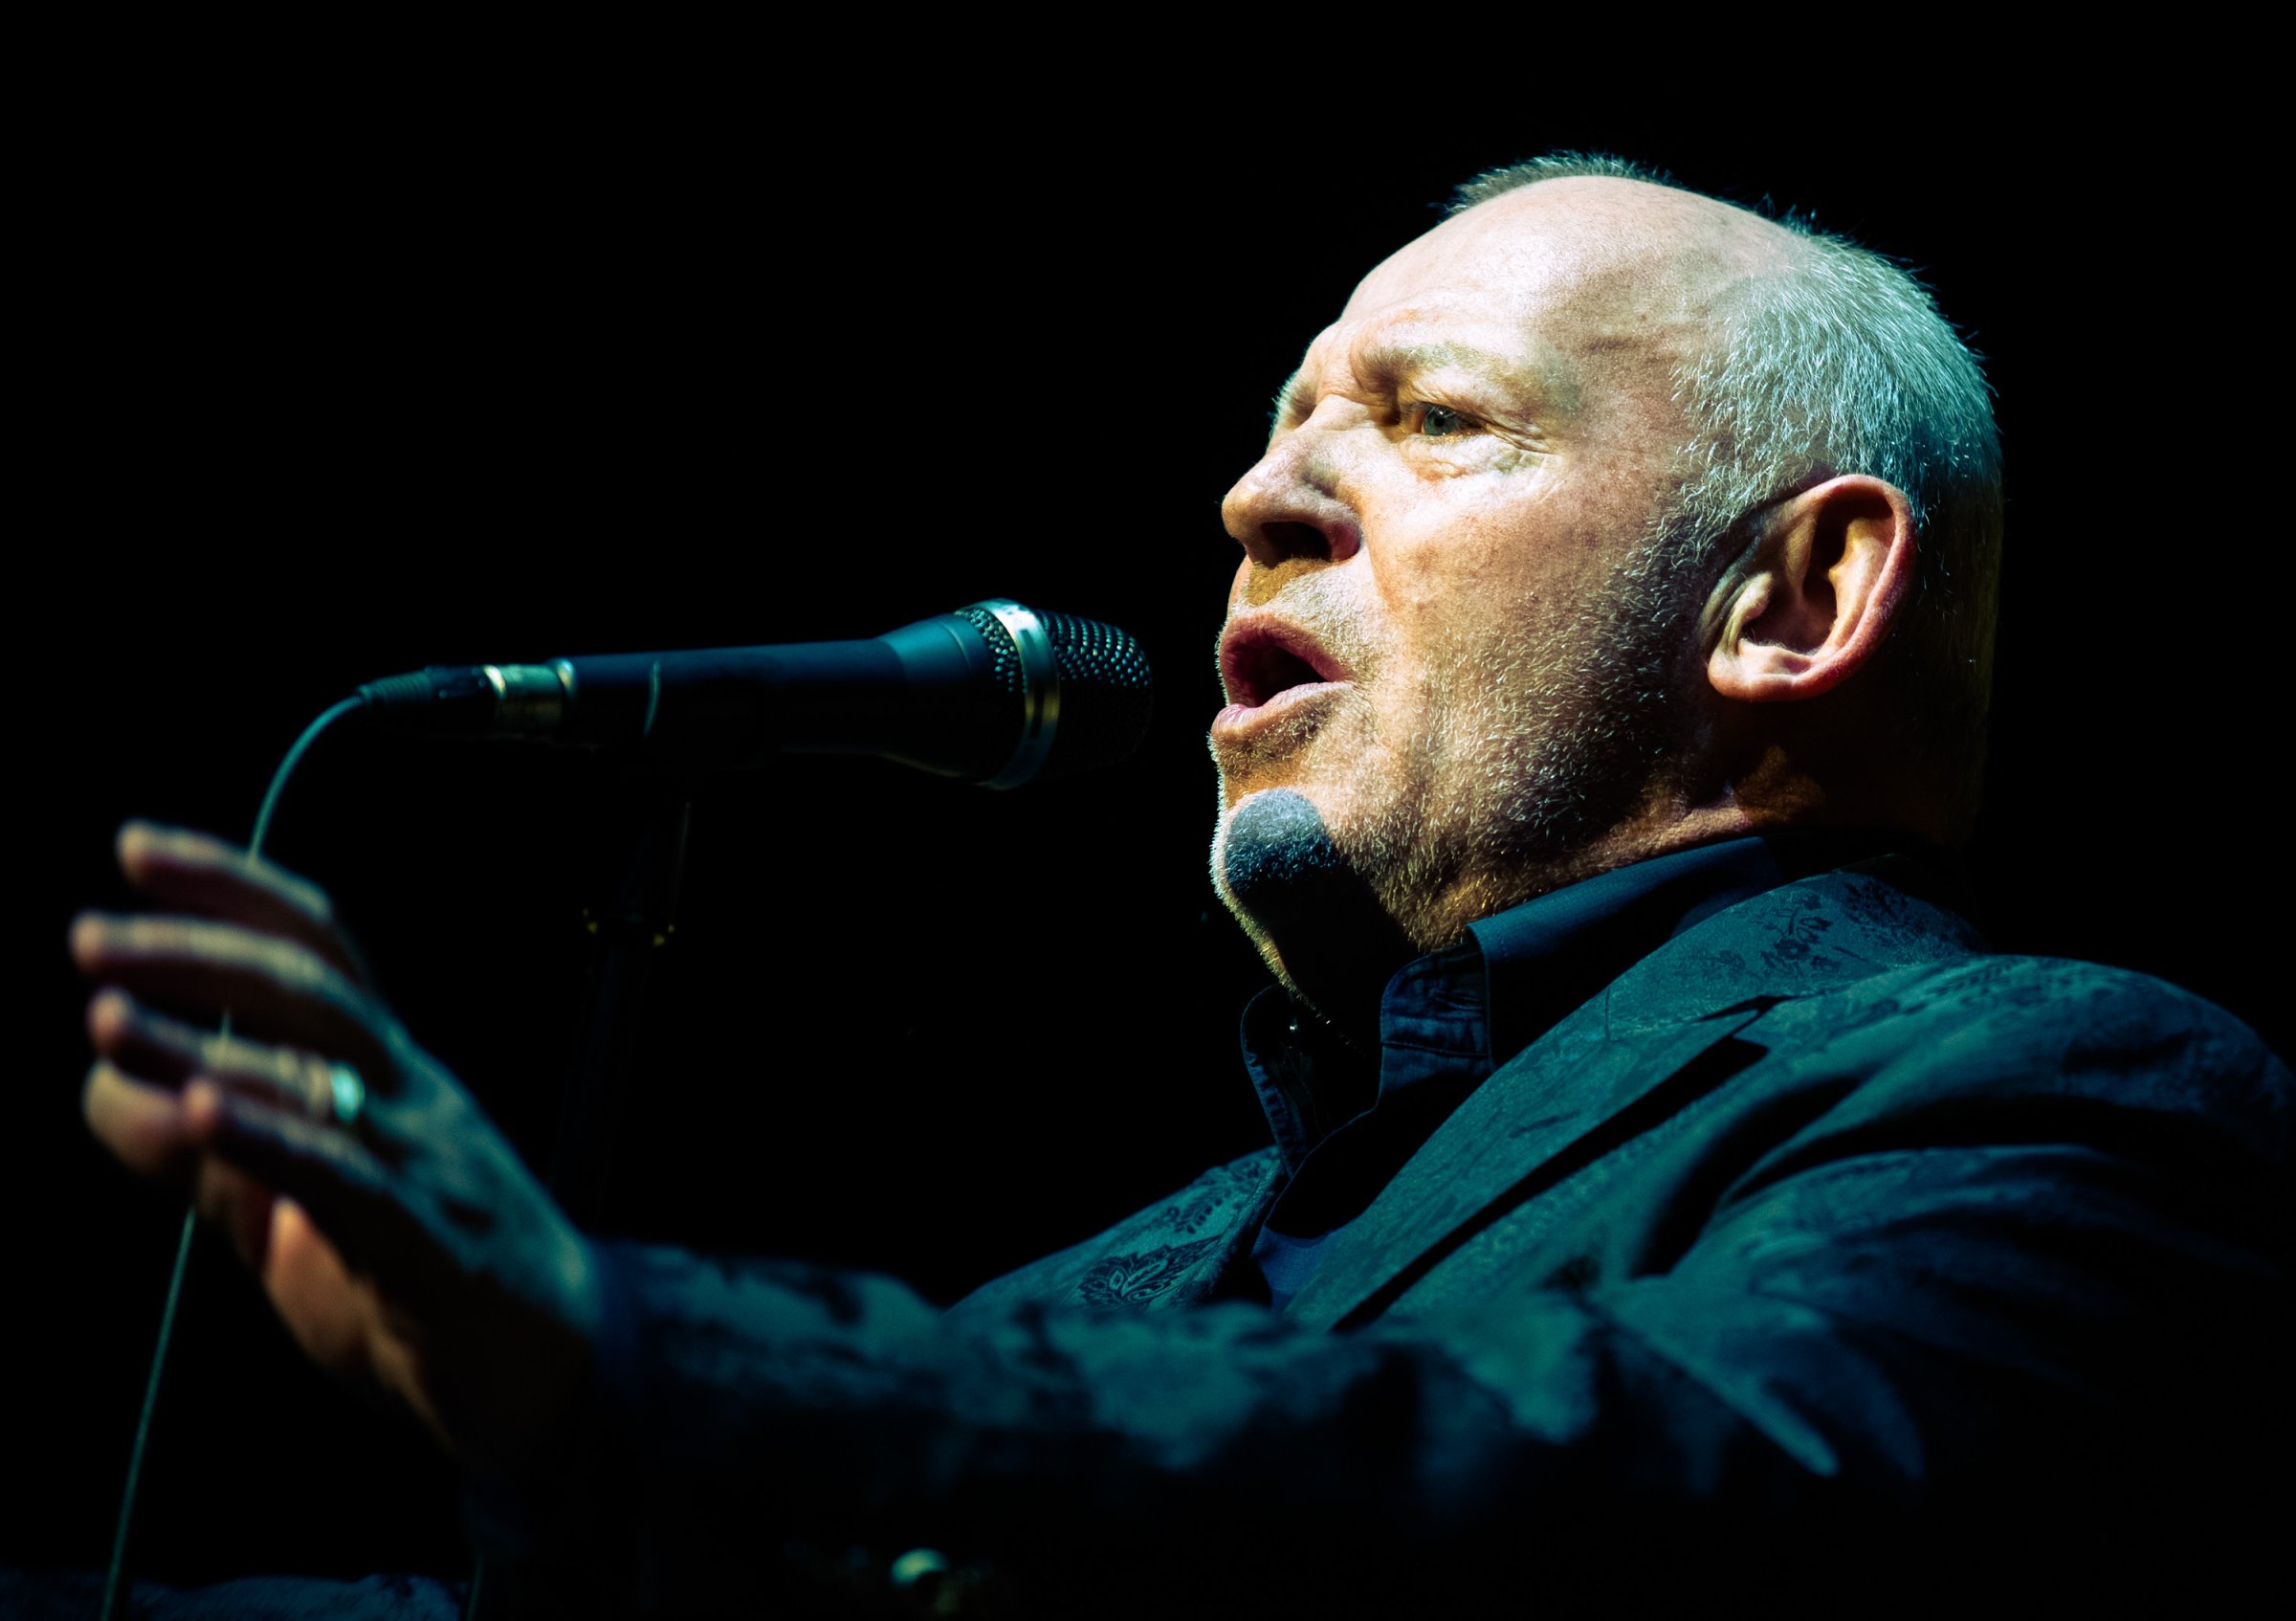 Joe Cocker on stage in Nice, France on Apr. 6, 2013.